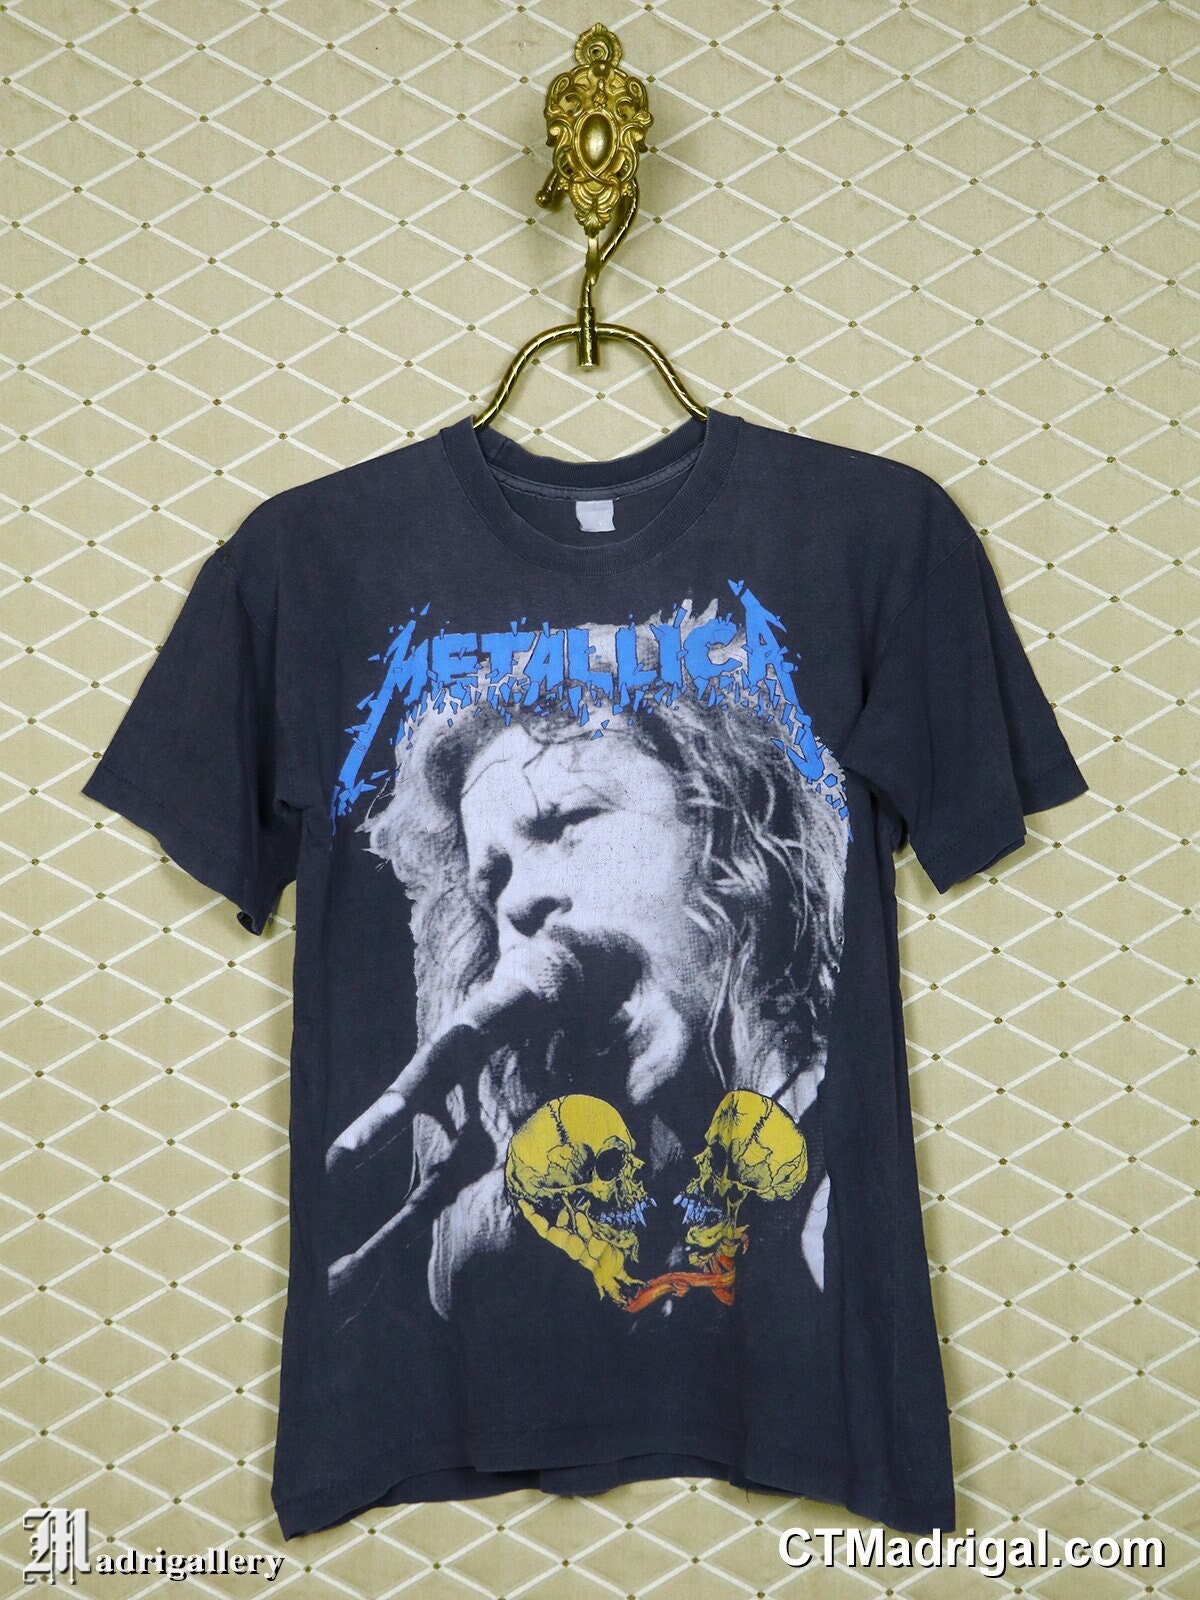 Metallica T-shirt Vintage Rare Tour Shirt Iron Maiden Slayer